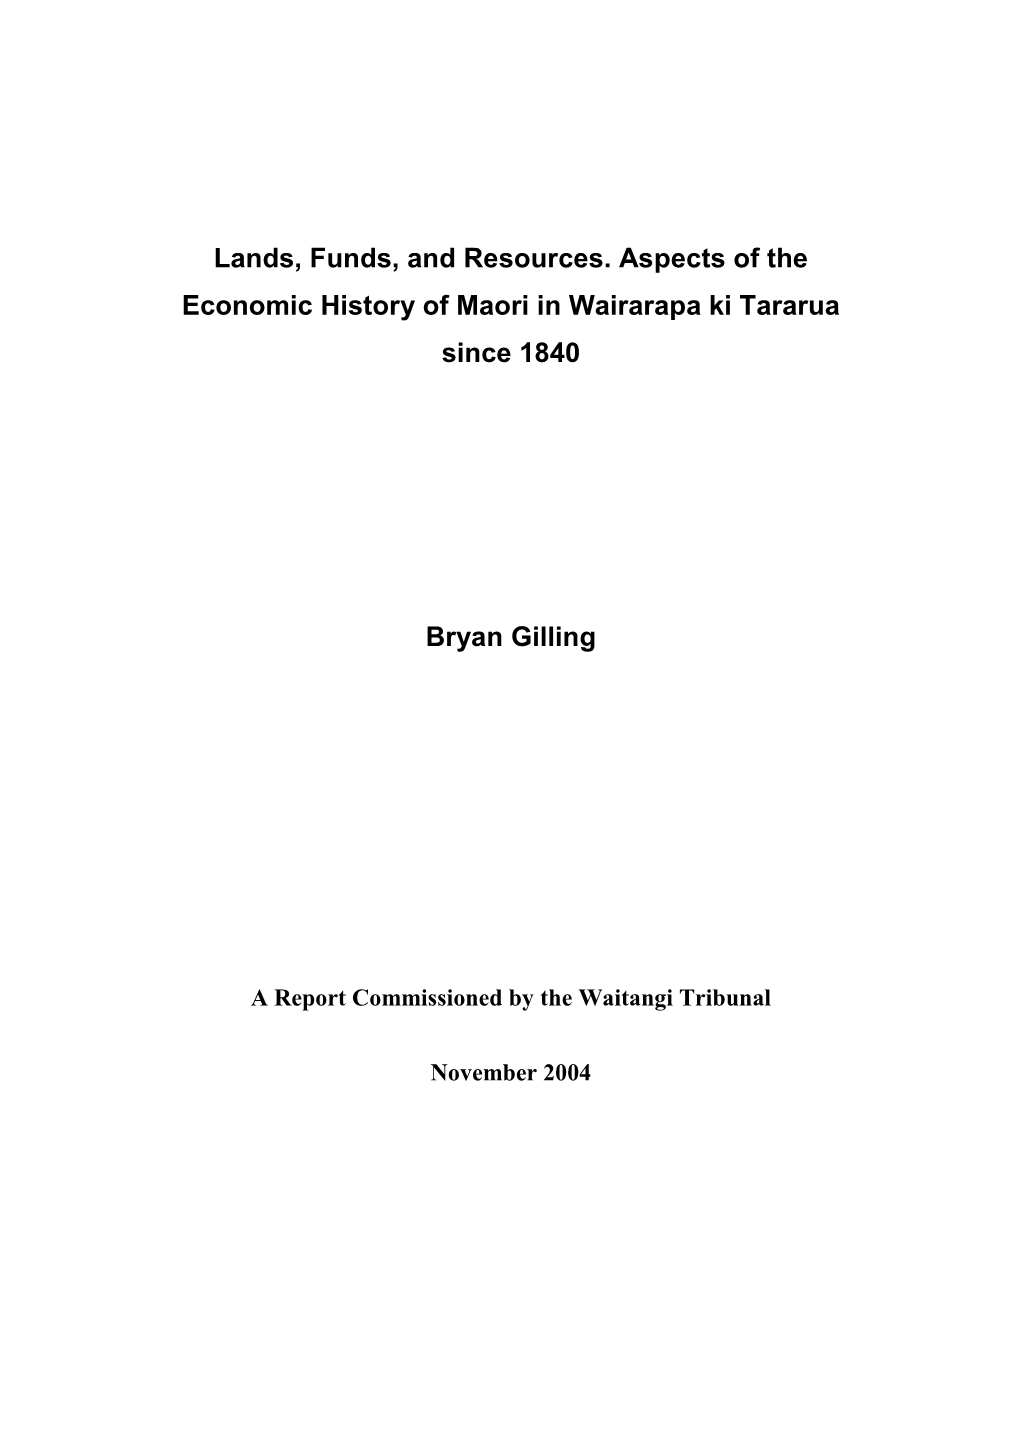 Lands, Funds, and Resources. Aspects of the Economic History of Maori in Wairarapa Ki Tararua Since 1840